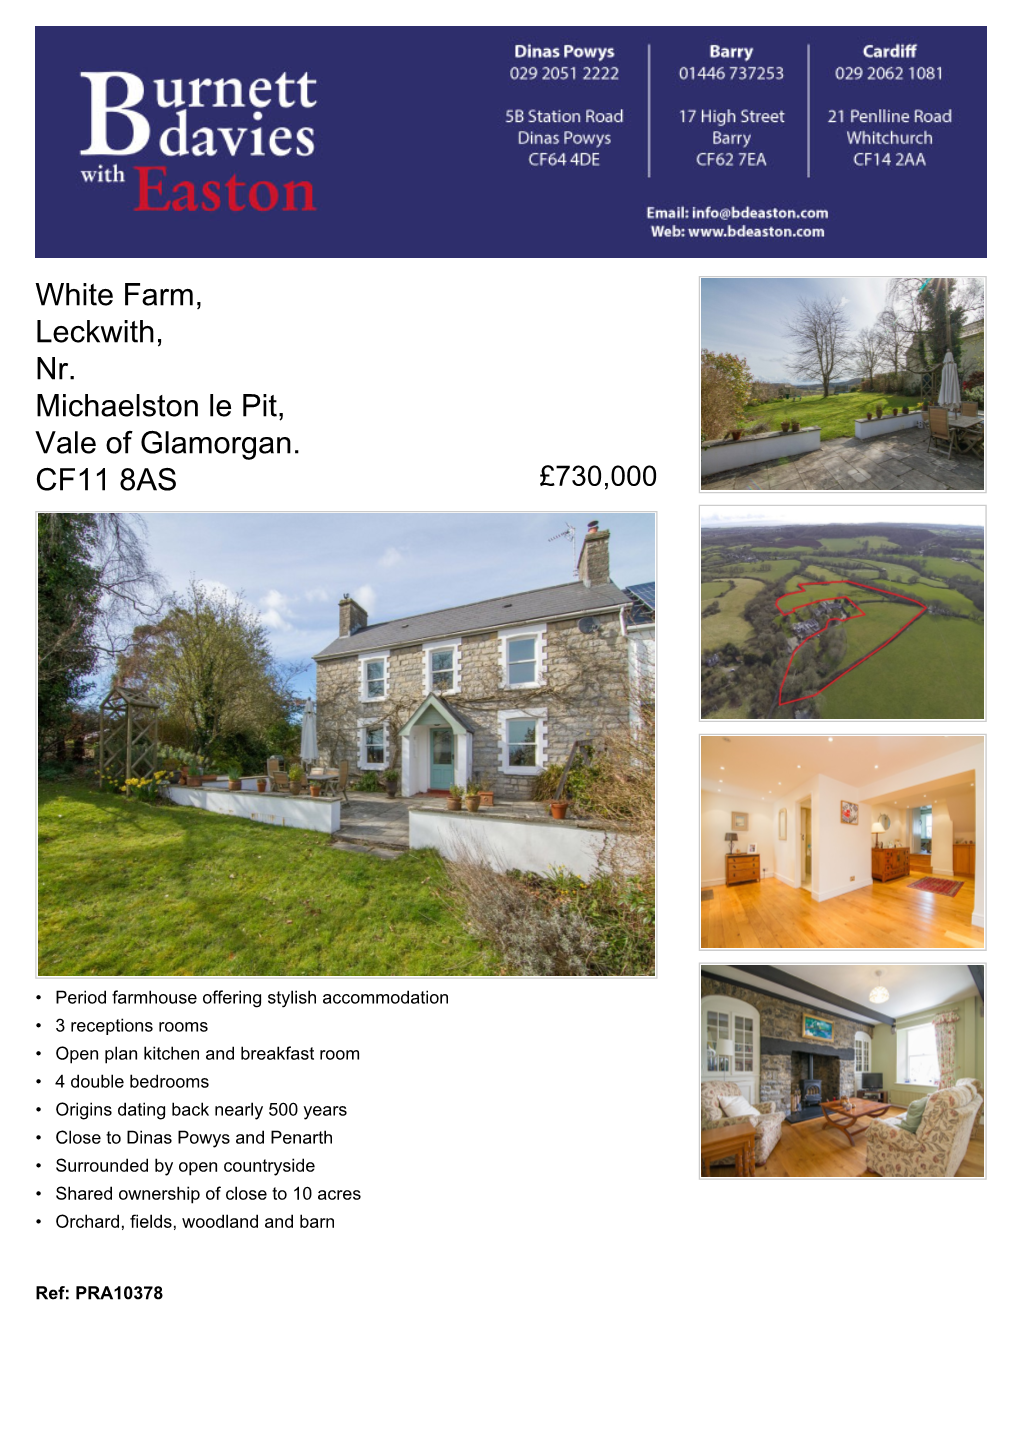 White Farm, Leckwith, Nr. Michaelston Le Pit, Vale of Glamorgan. CF11 8AS £730,000